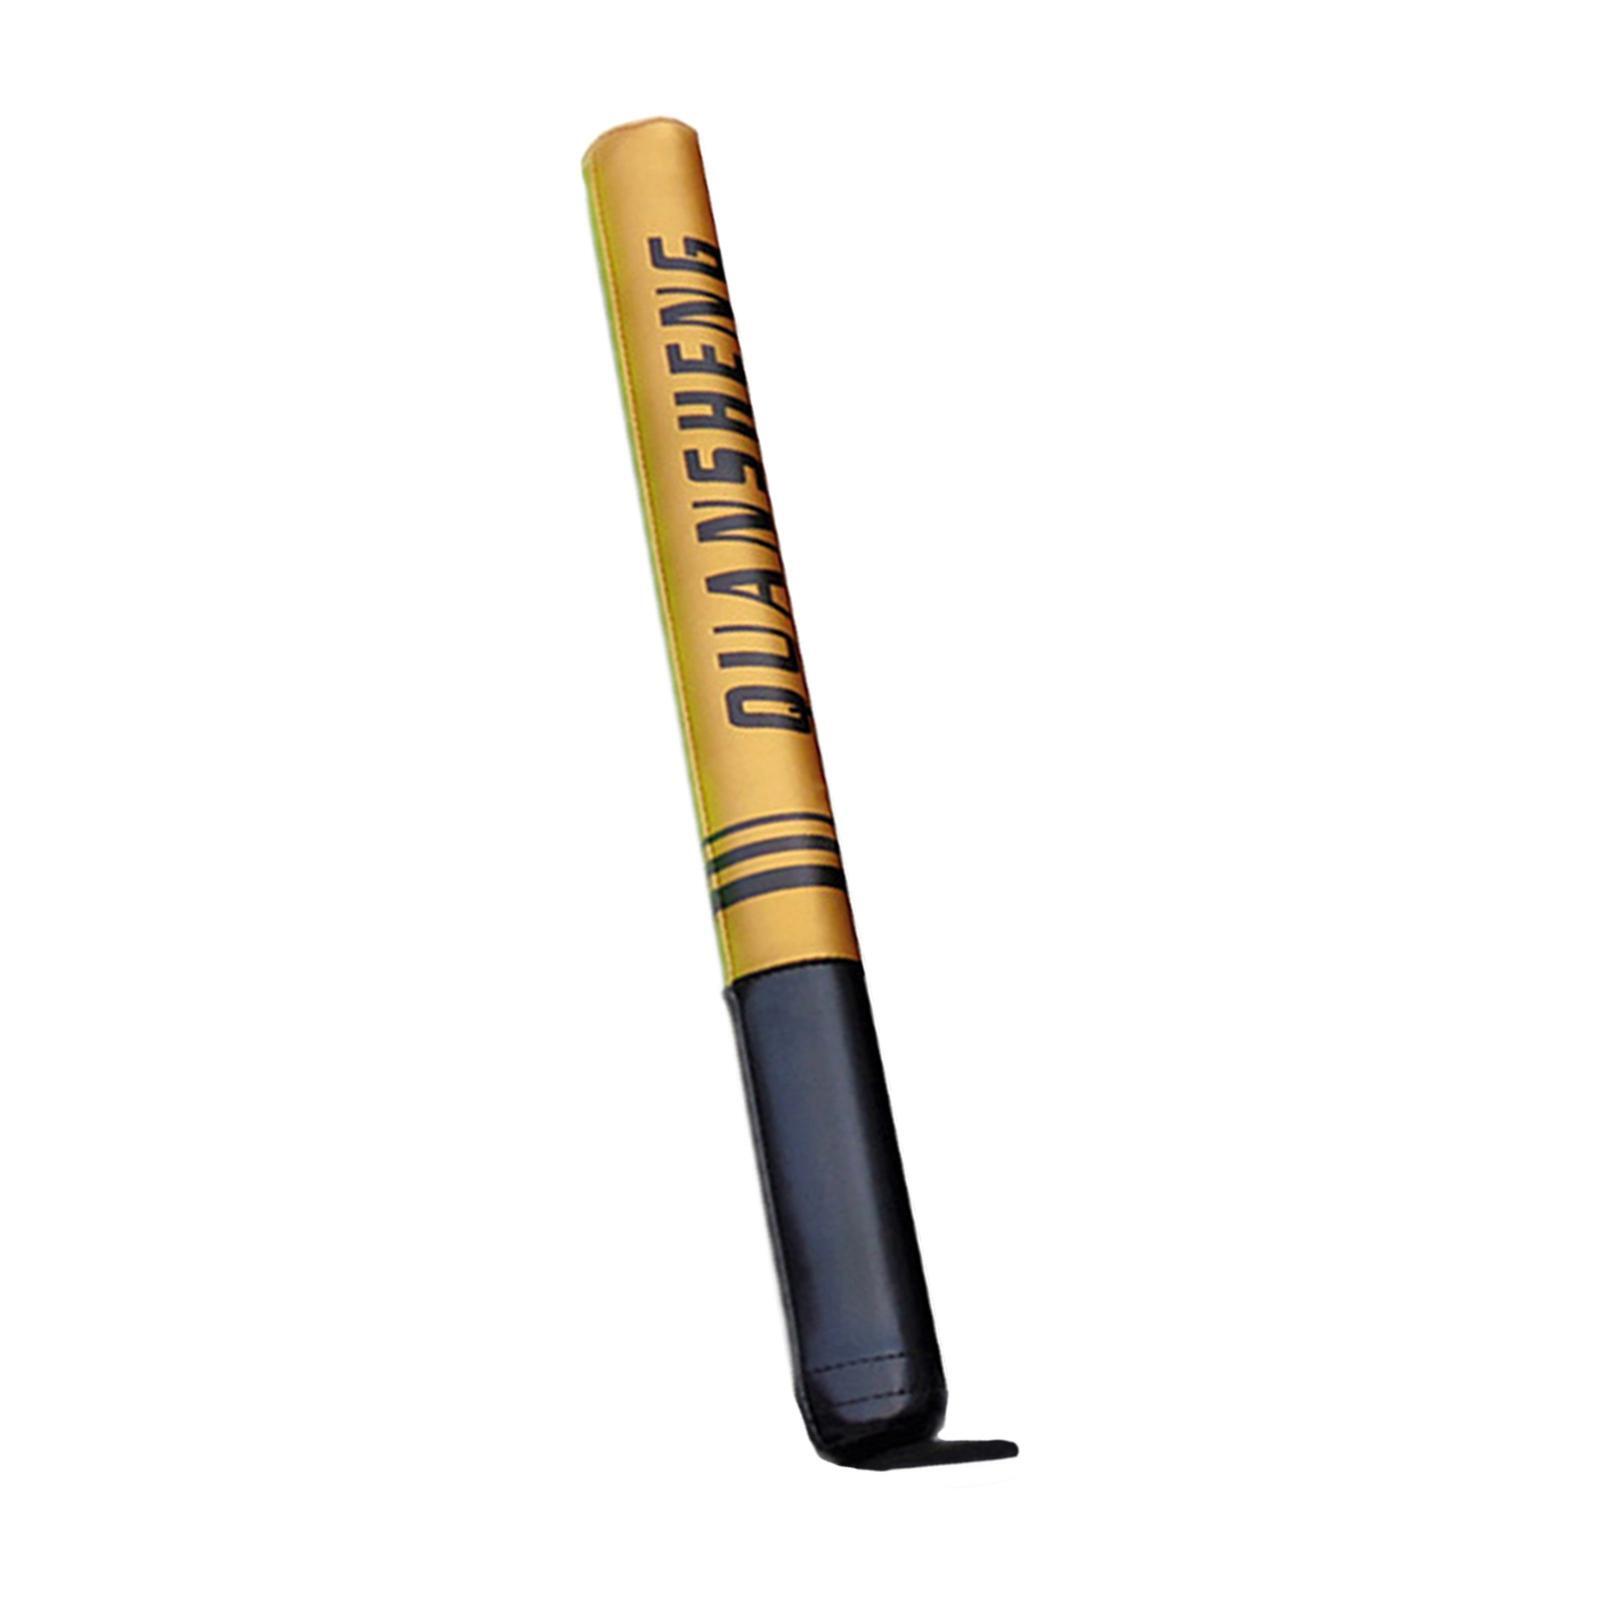 1 2 3 Professional Boxing Training Stick Target Precision PU Sticks